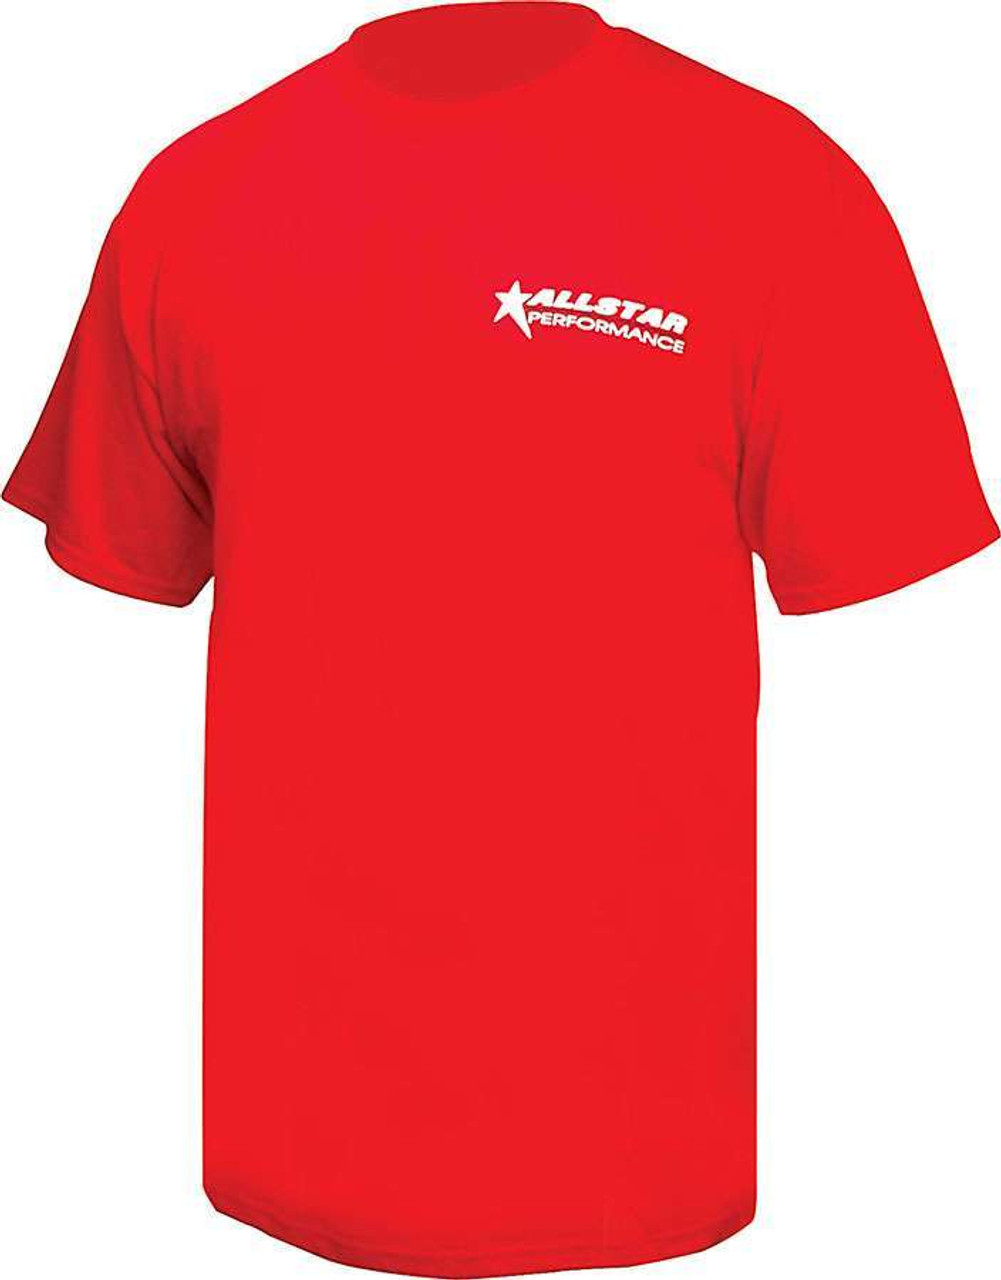 Allstar T-Shirt Red Large